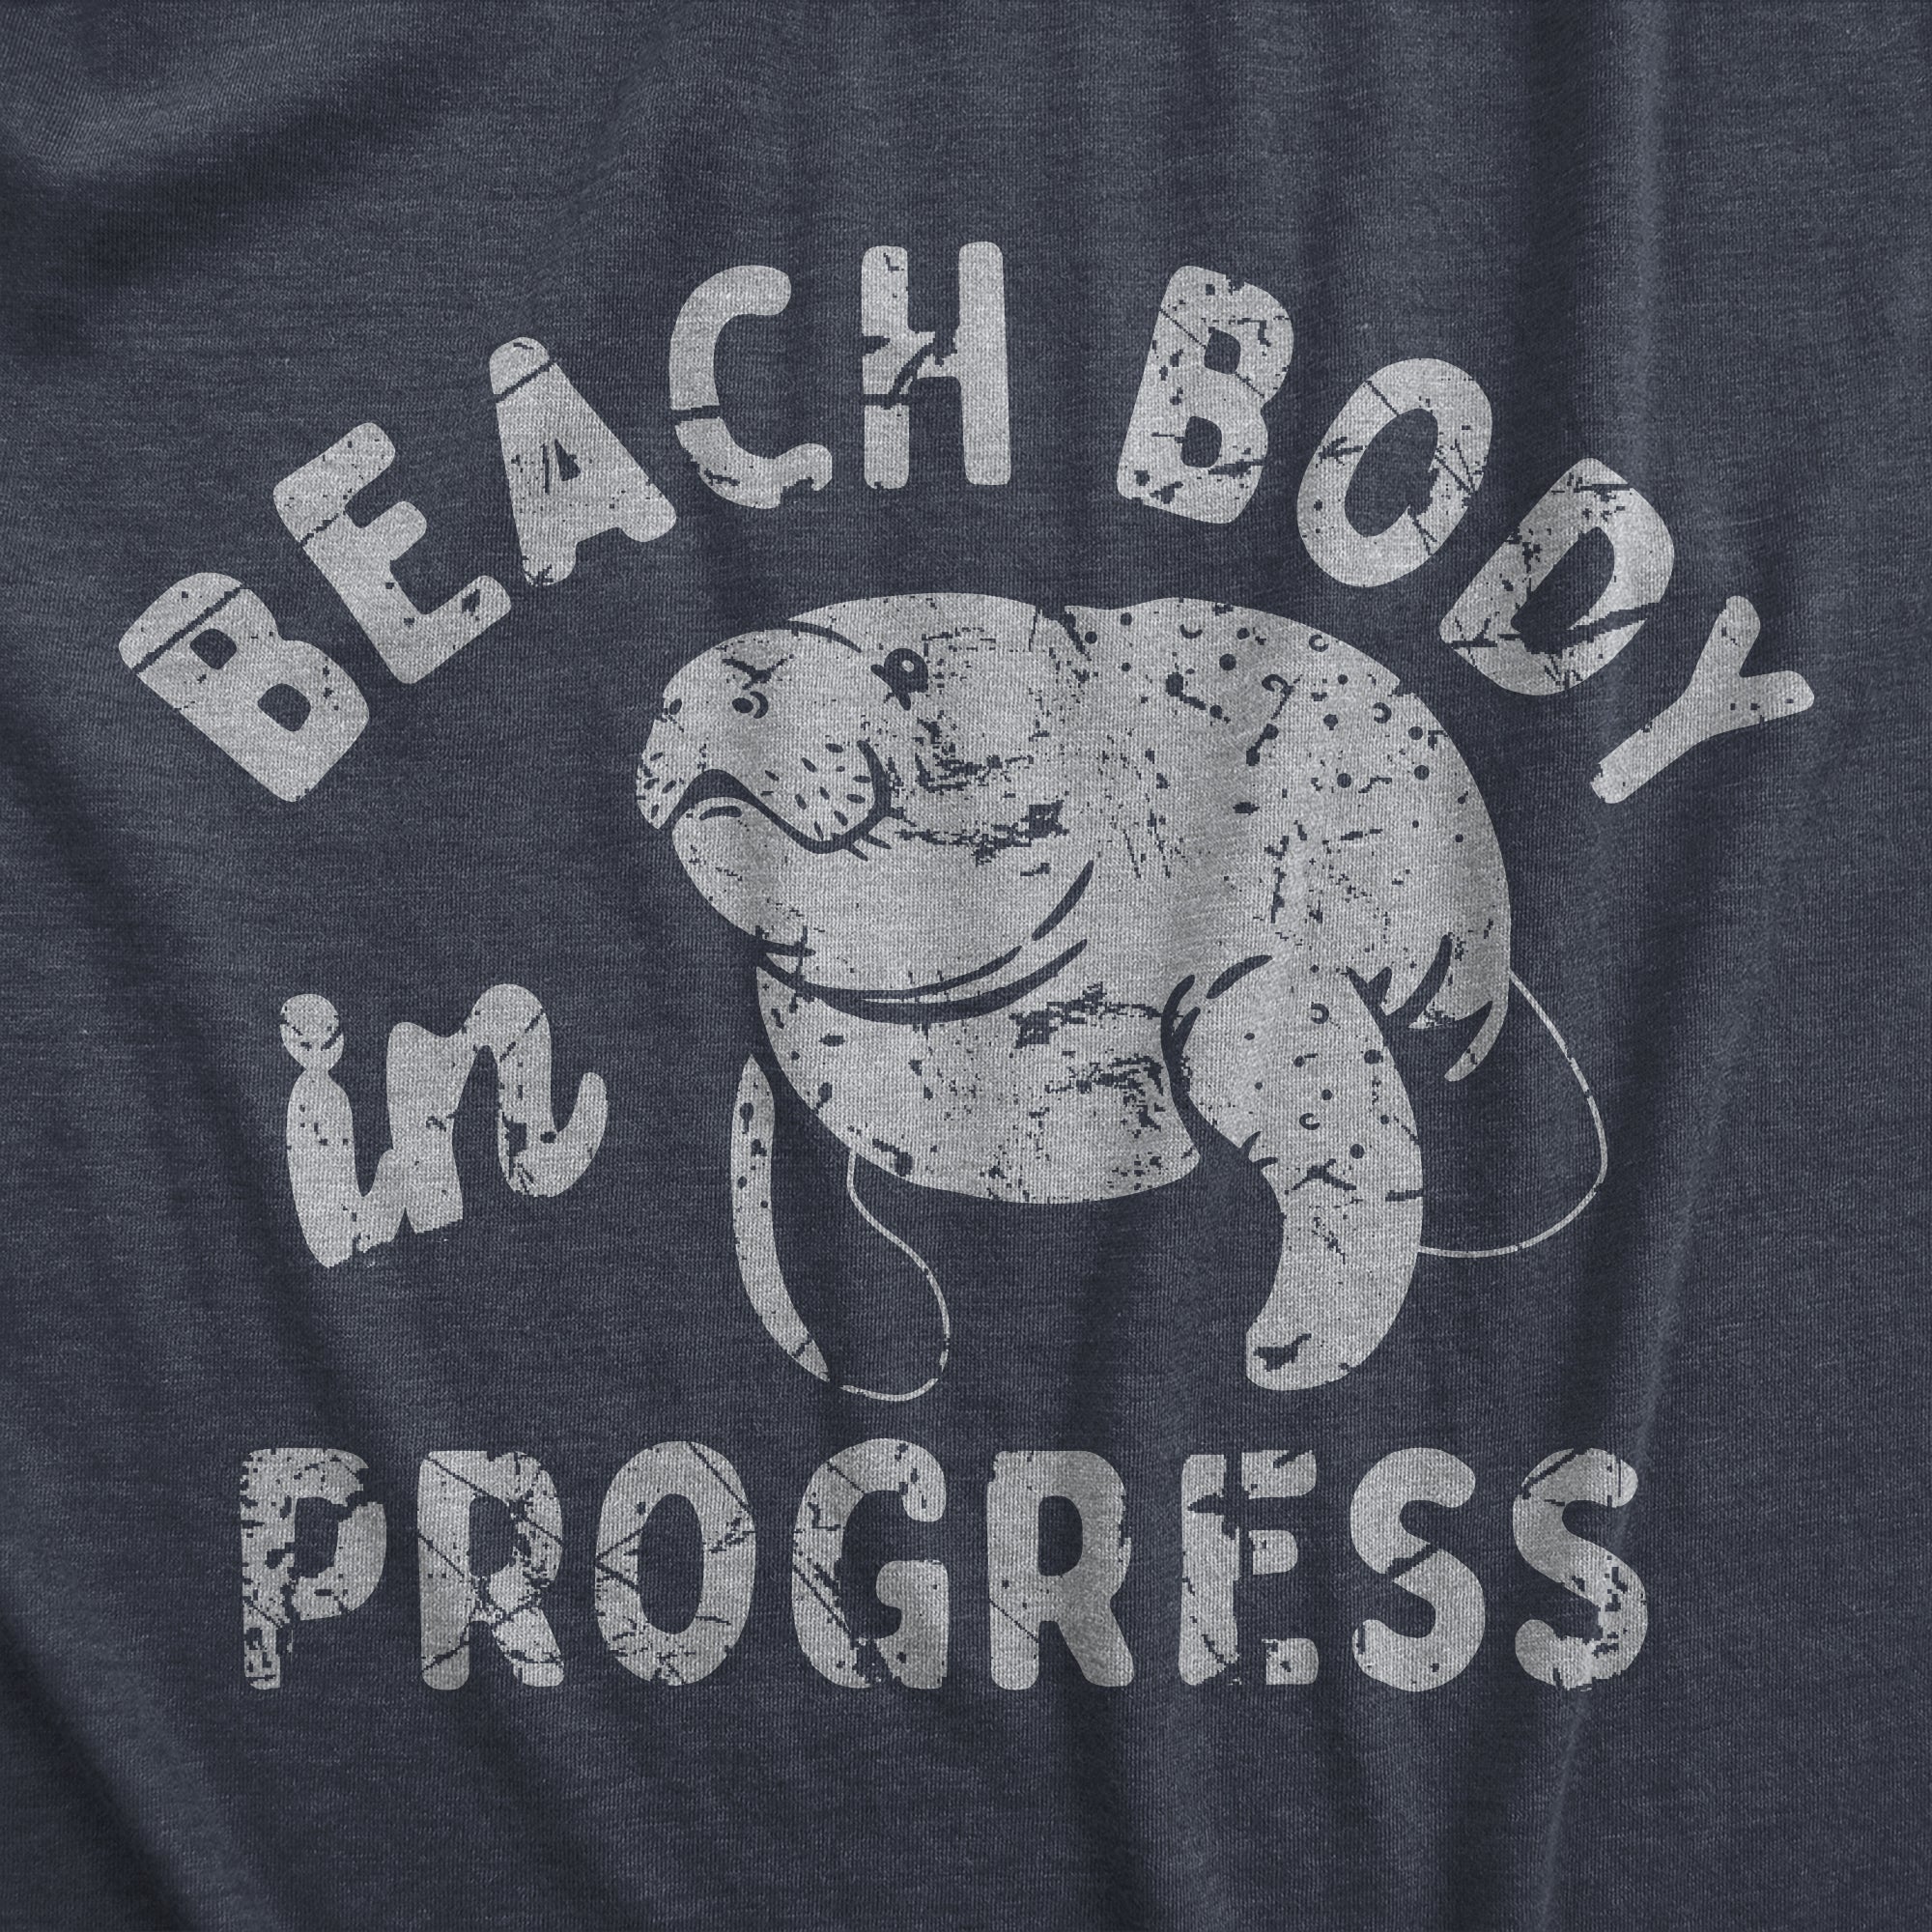 Funny Heather Navy - BEACH Beach Body In Progress Womens T Shirt Nerdy Fitness sarcastic Tee